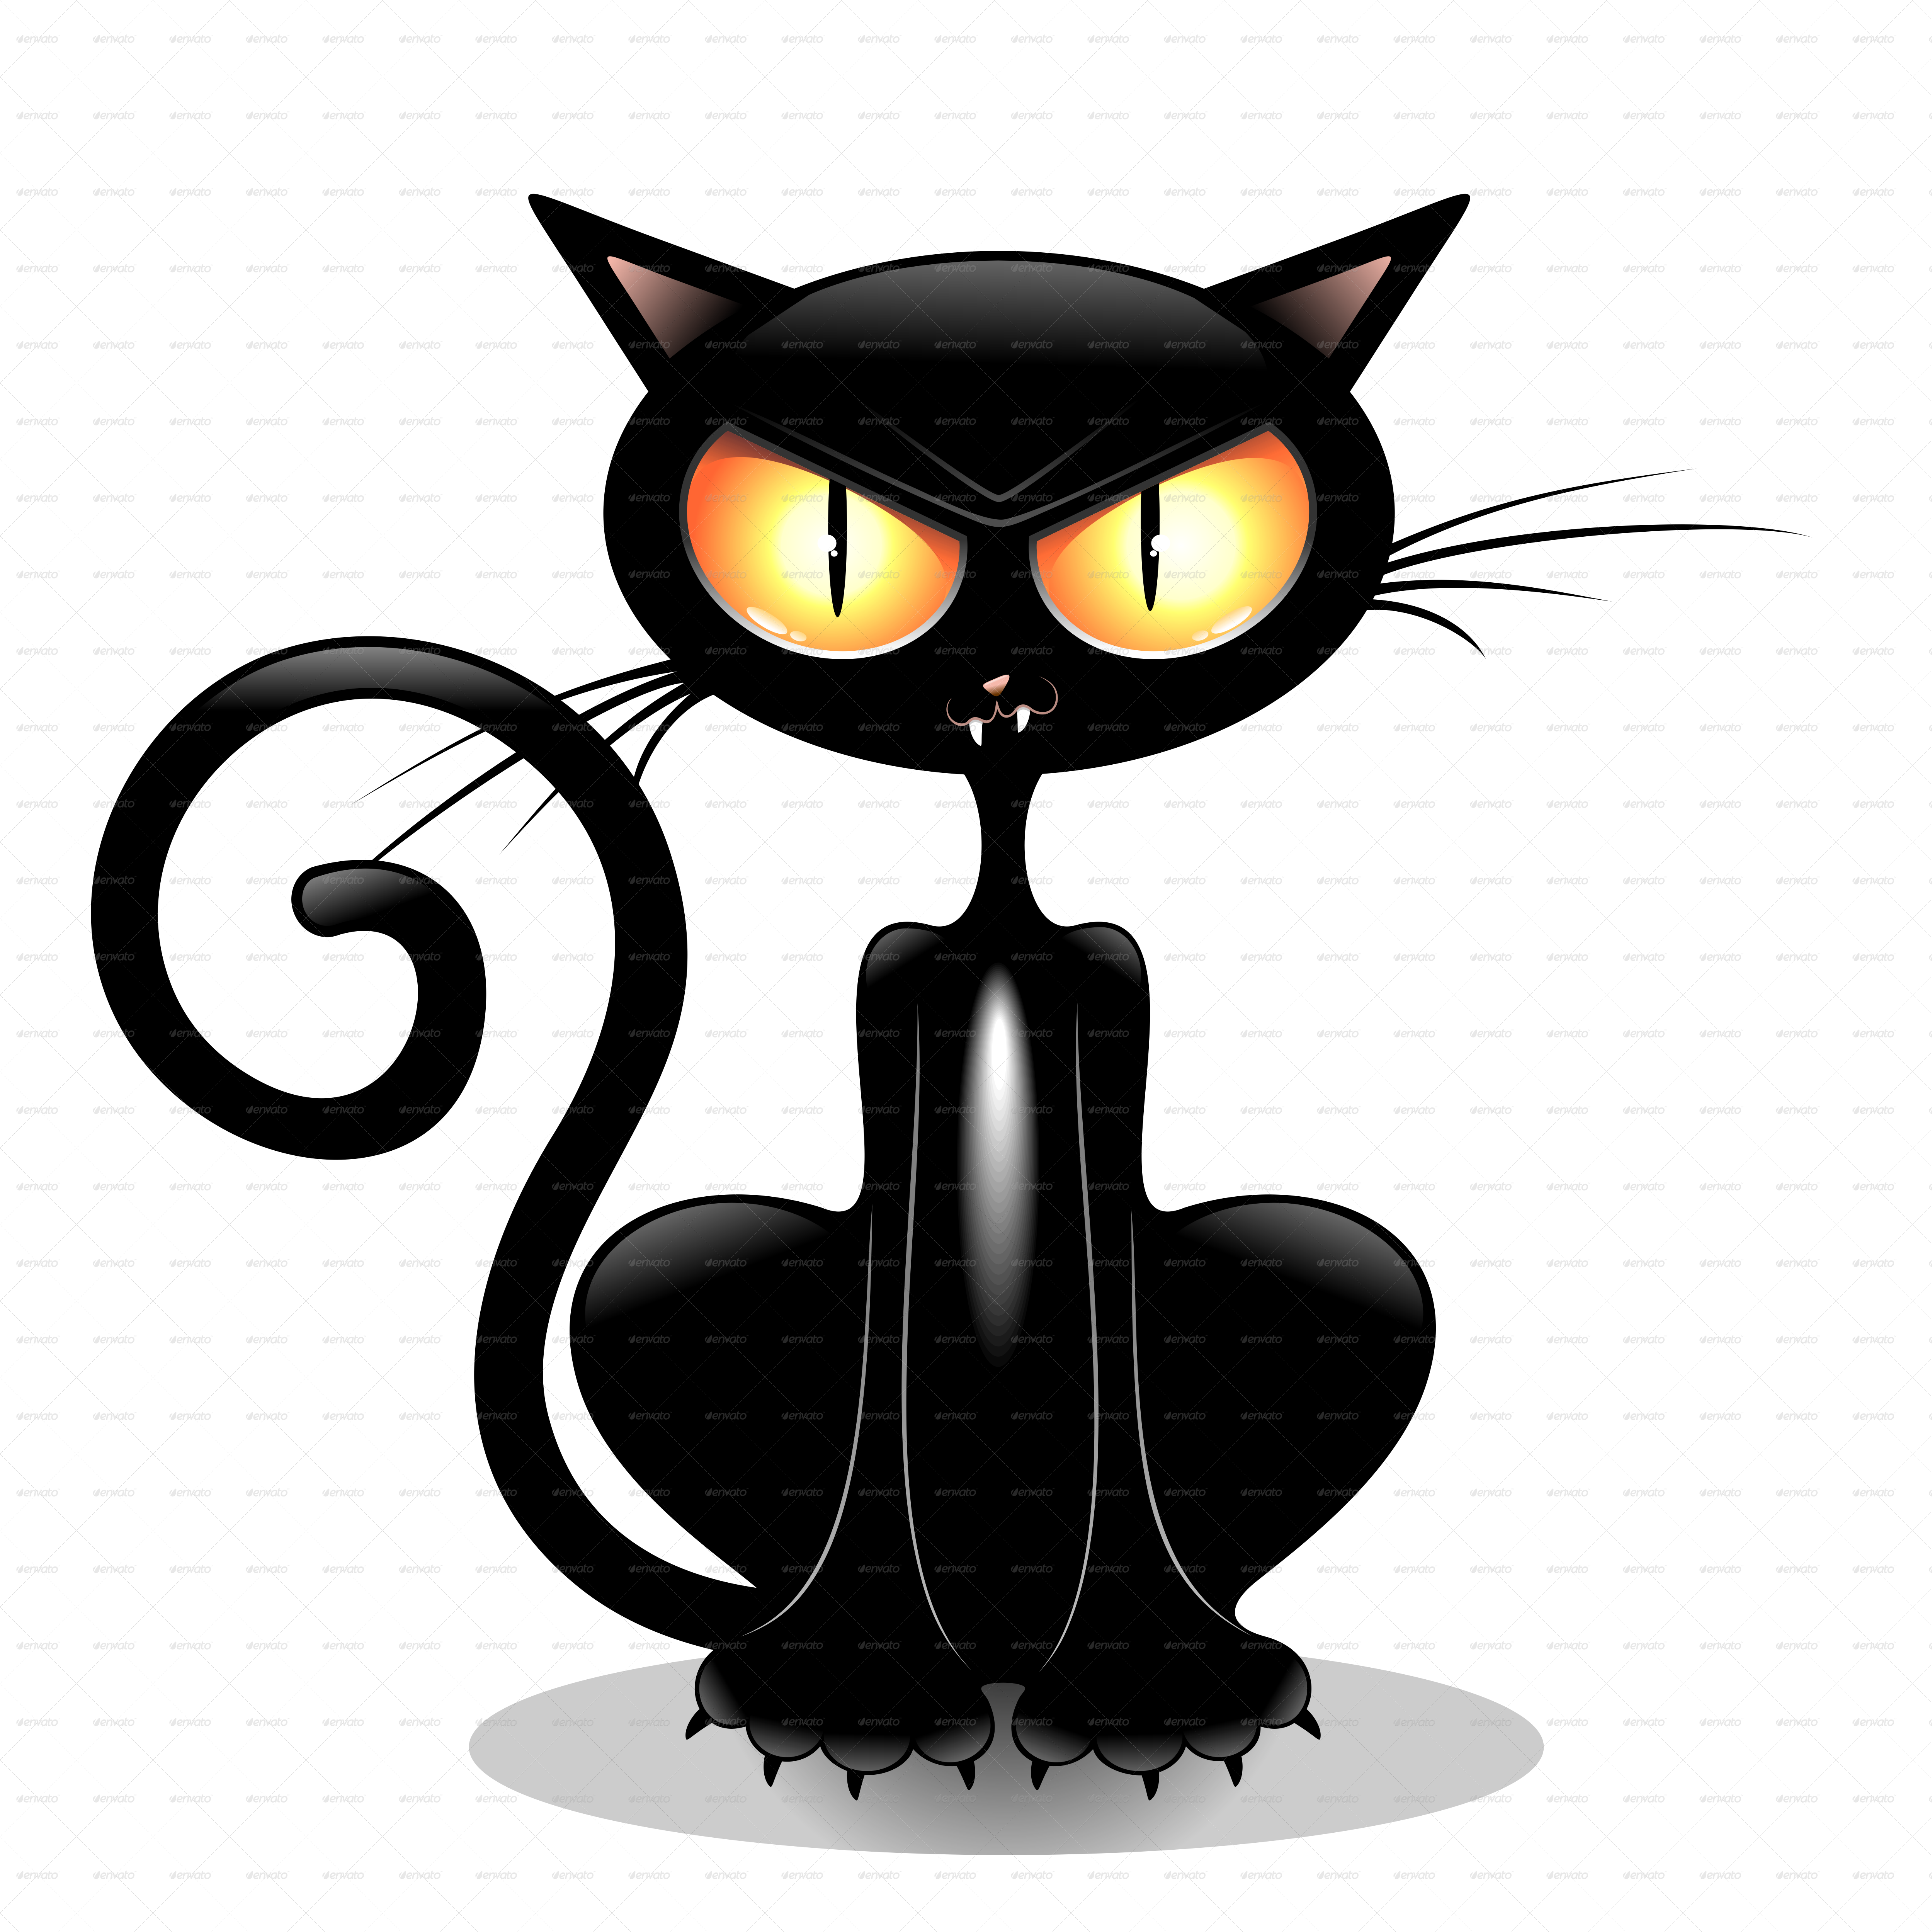 Angry Black Cat Cartoon by Bluedarkat | GraphicRiver